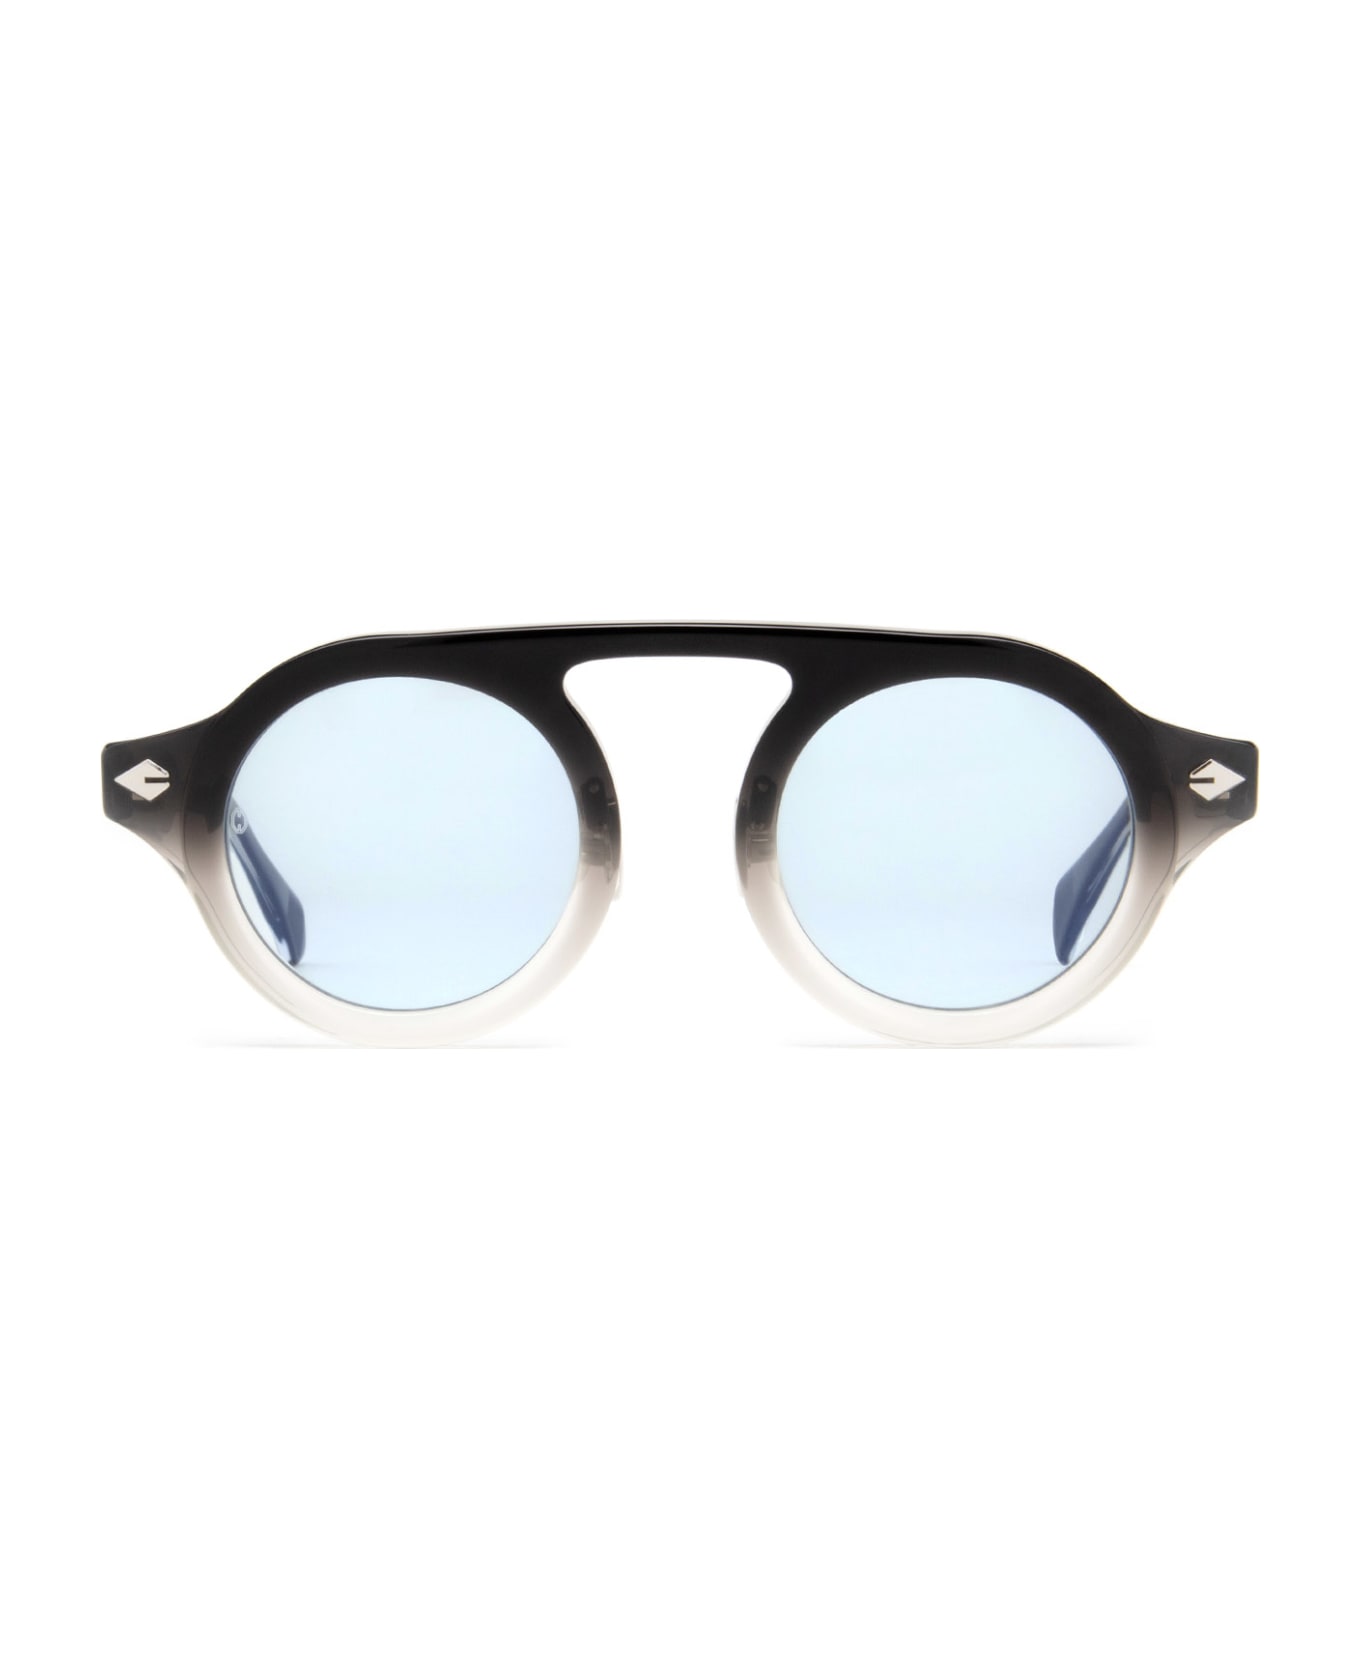 T Henri E2 Vapor Sunglasses サングラス